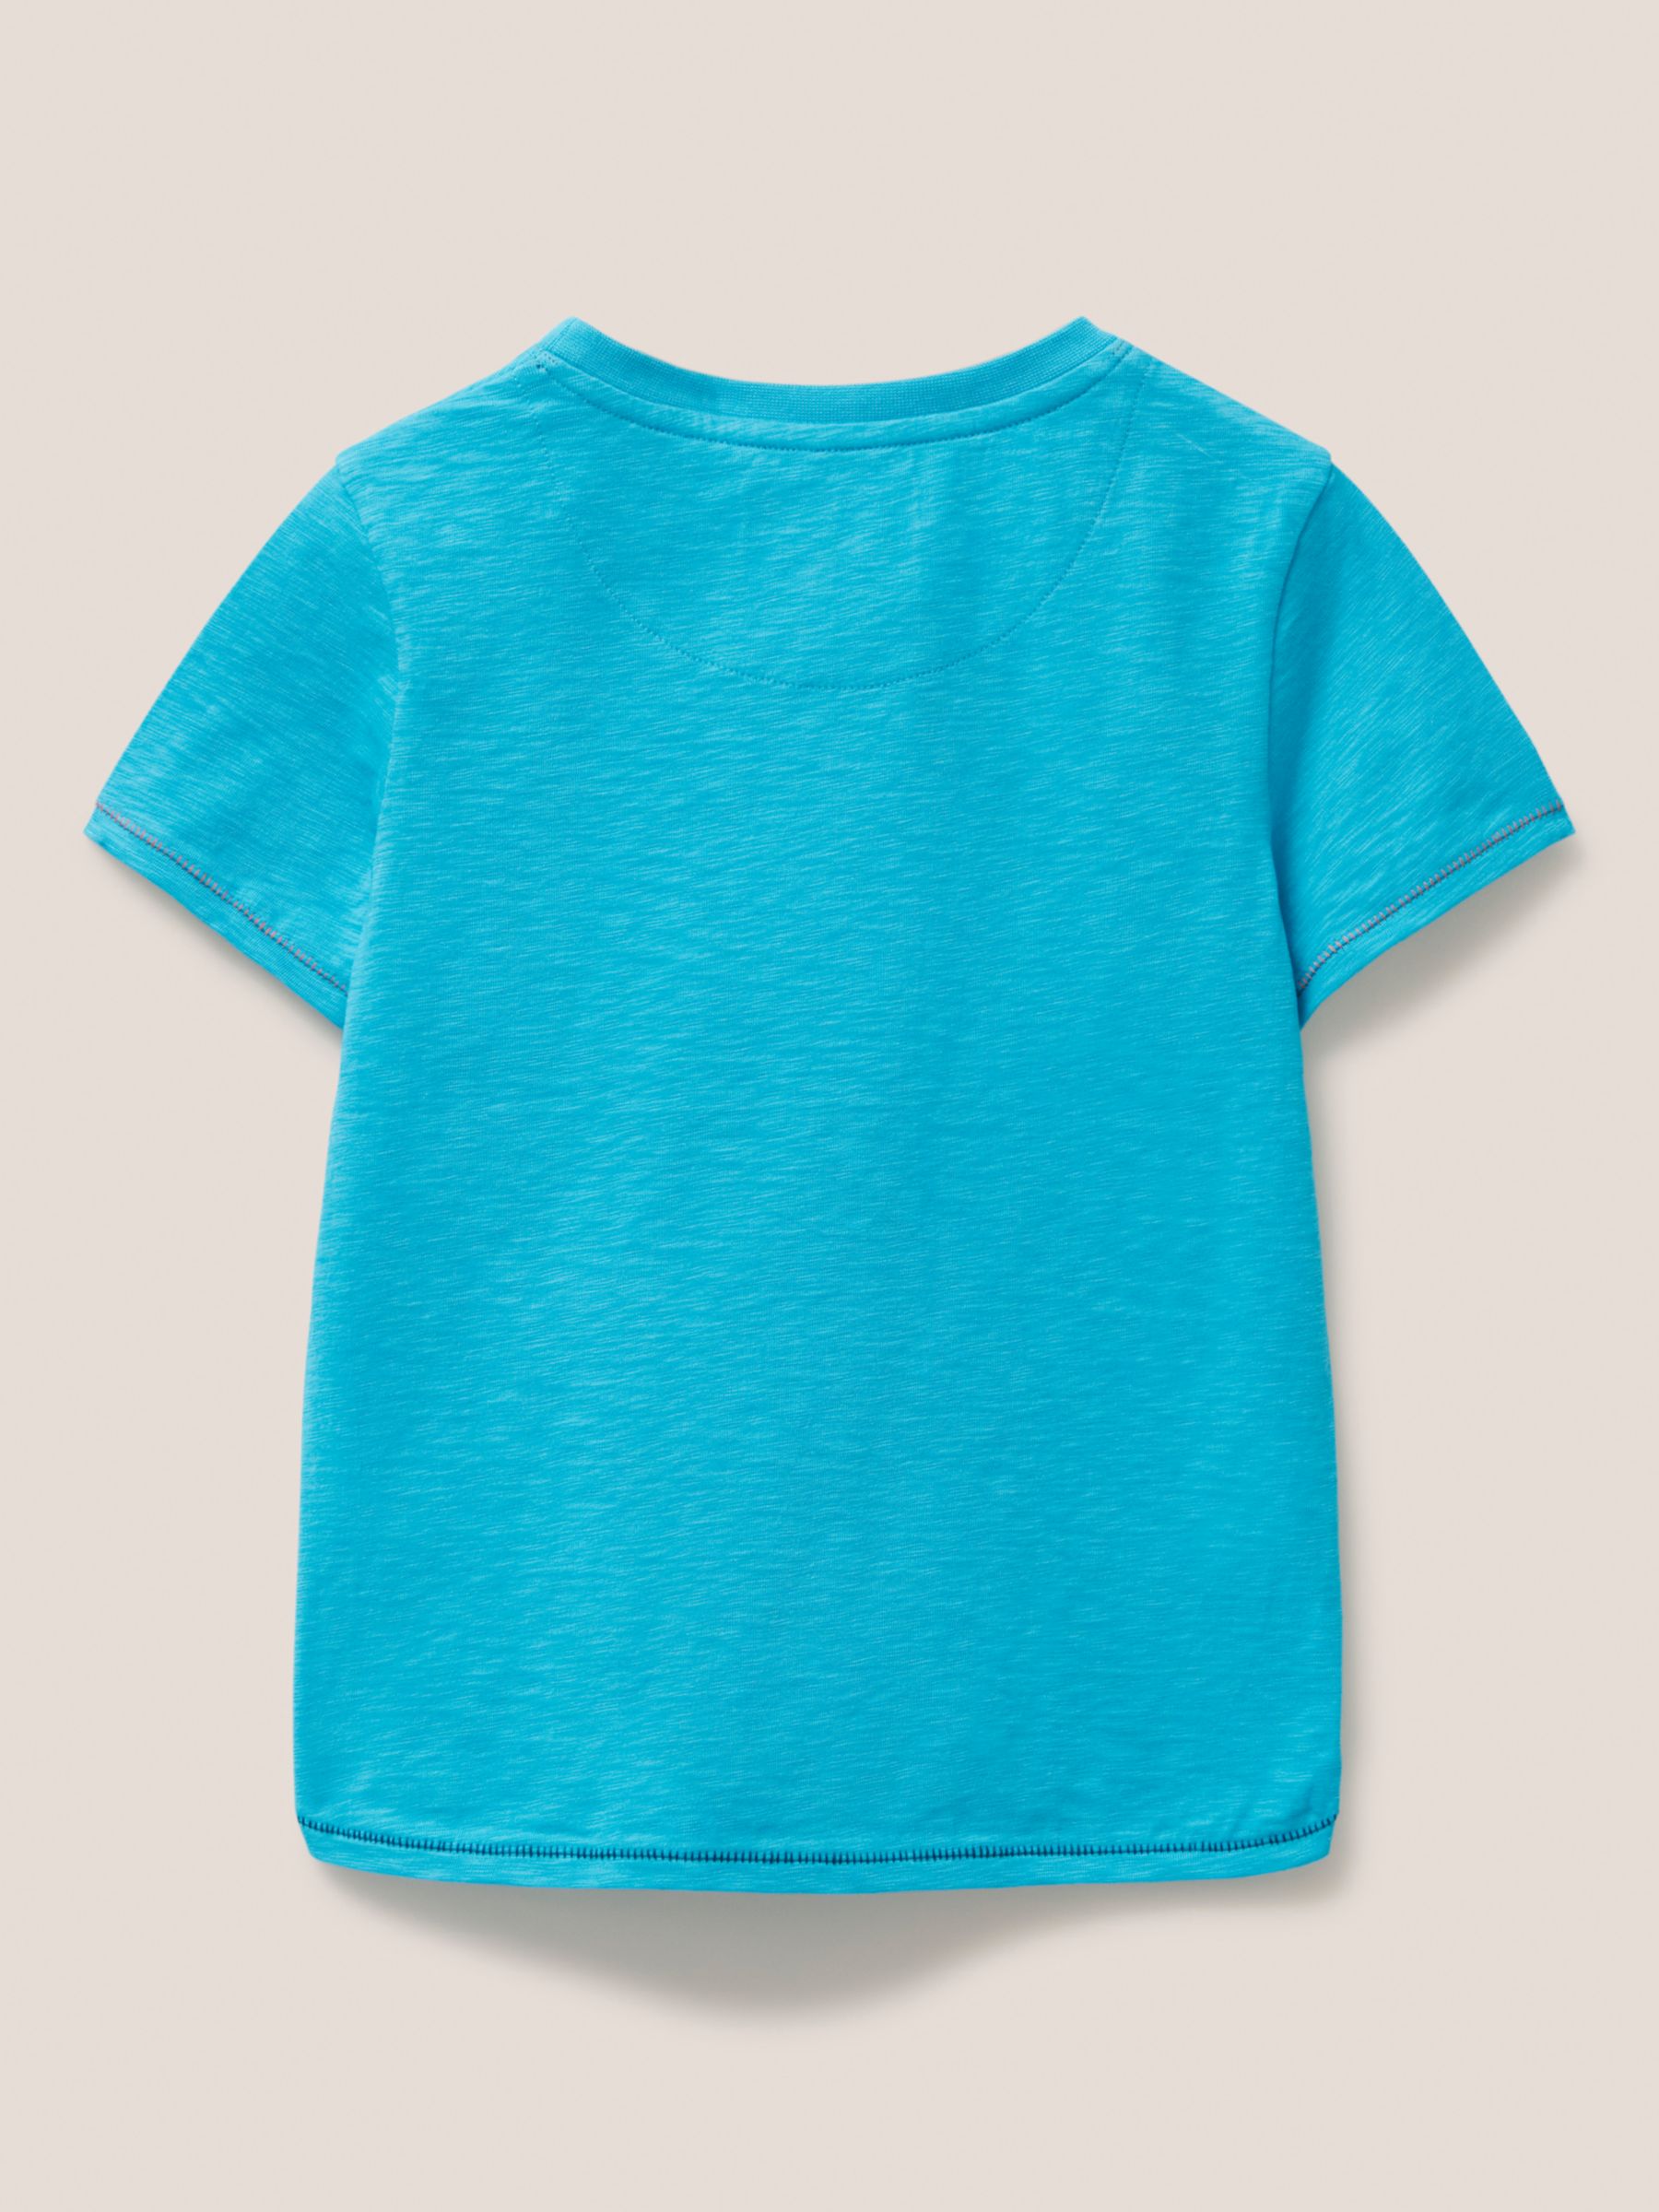 White Stuff Kids' Mountain Line Print Short Sleeve T-Shirt, Mid Teal at ...